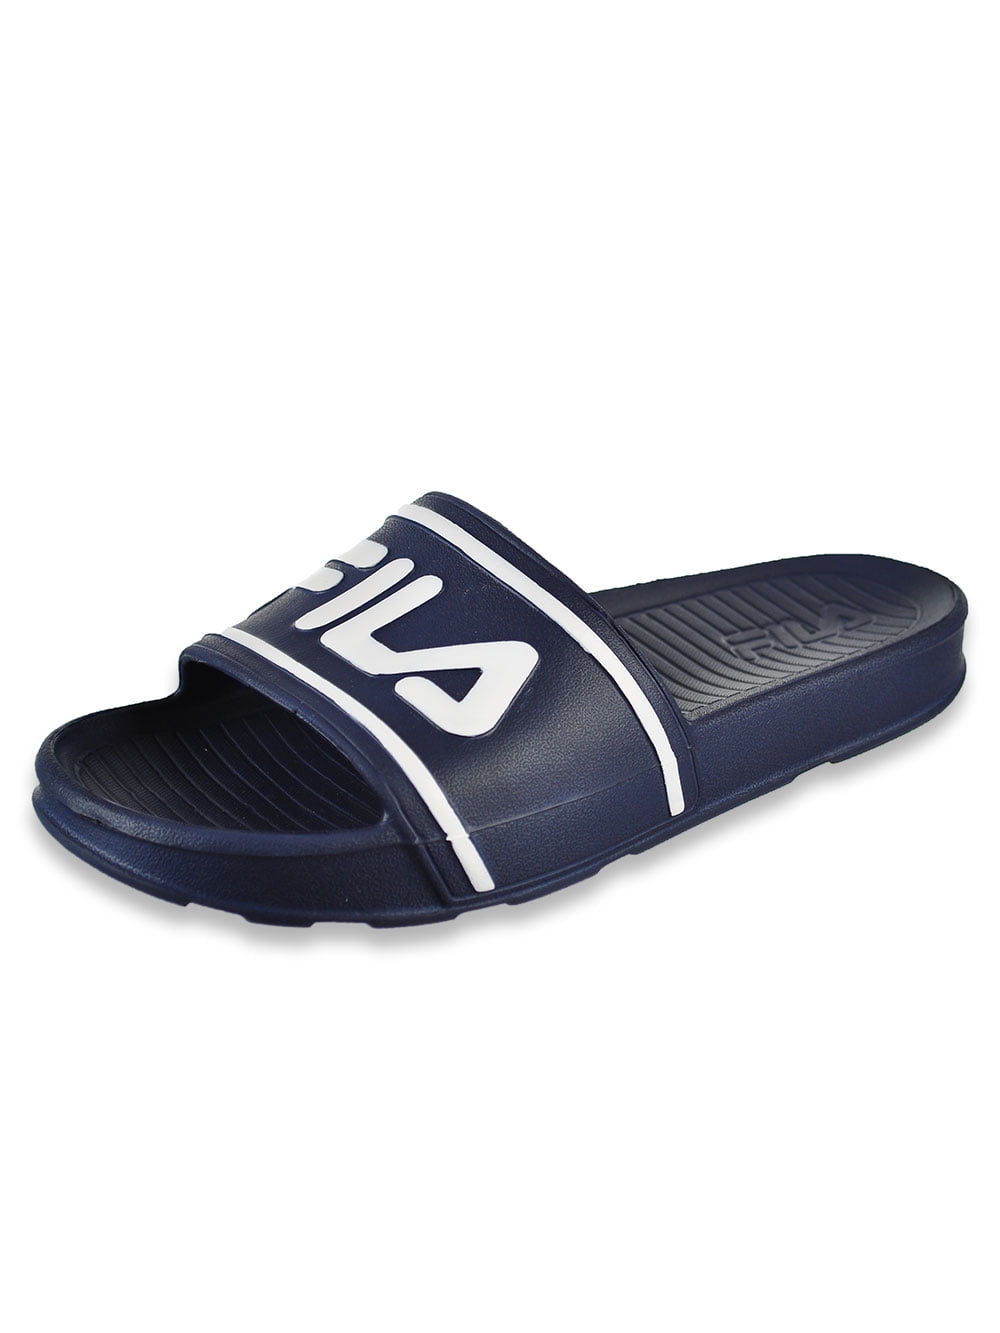 Prik Lastig breuk Fila Boys' Sleek Slide Sandals - navy/white, 6 youth - Walmart.com